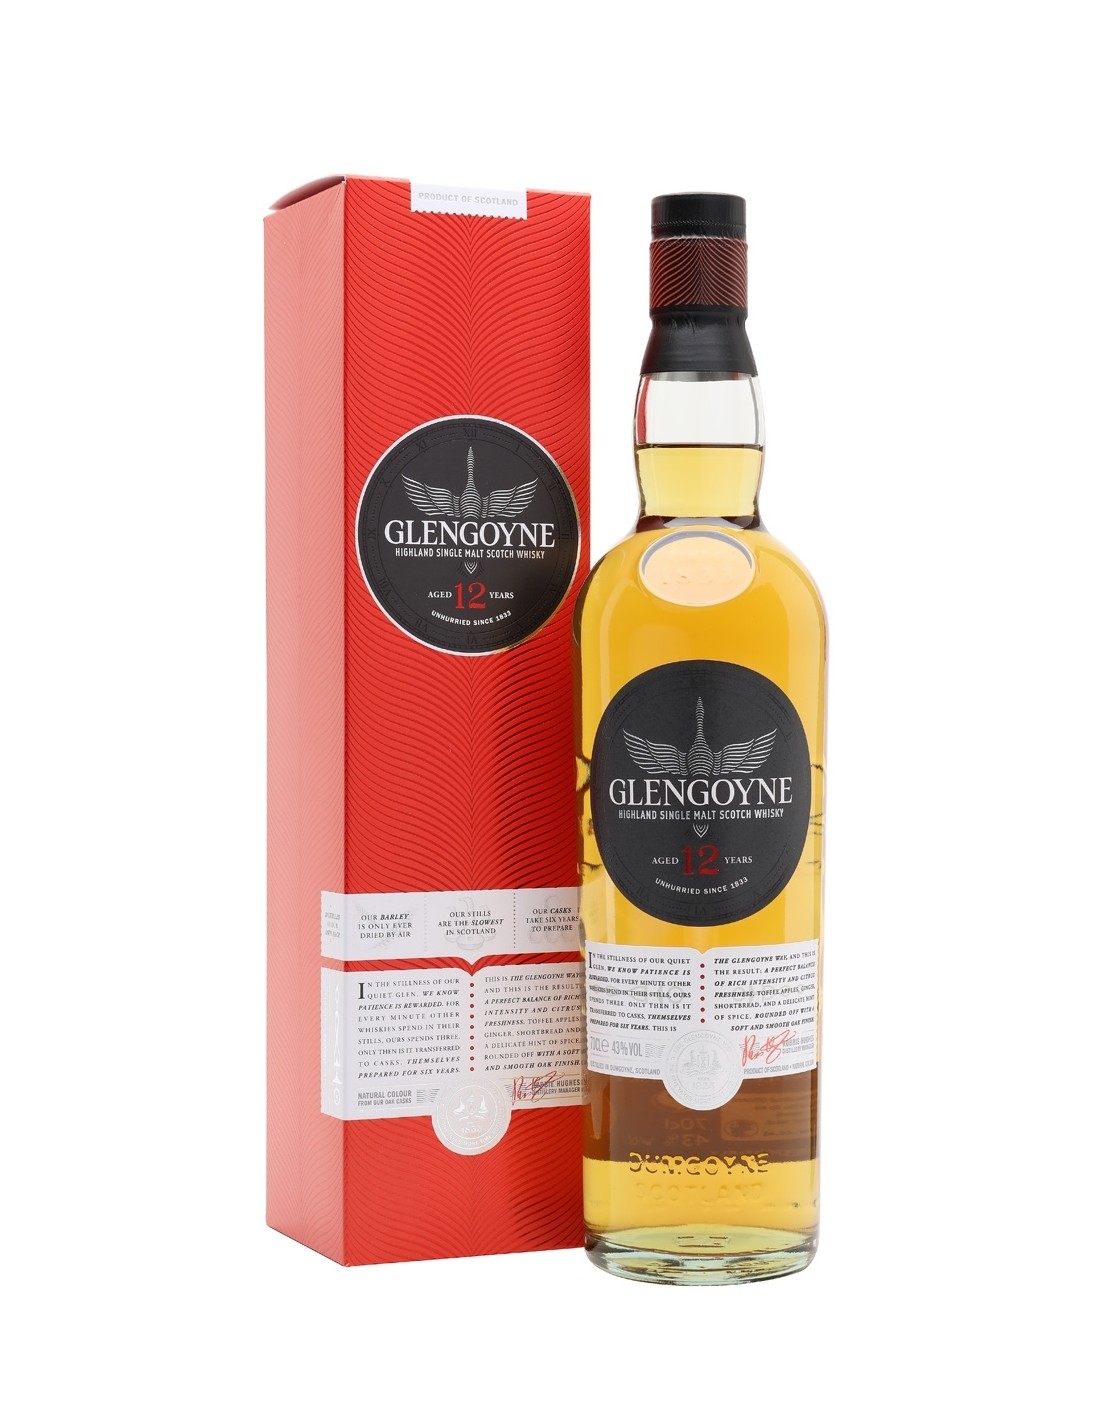 Whisky Glengoyne, 0.7L, 12 ani, 43% alc., Scotia alcooldiscount.ro